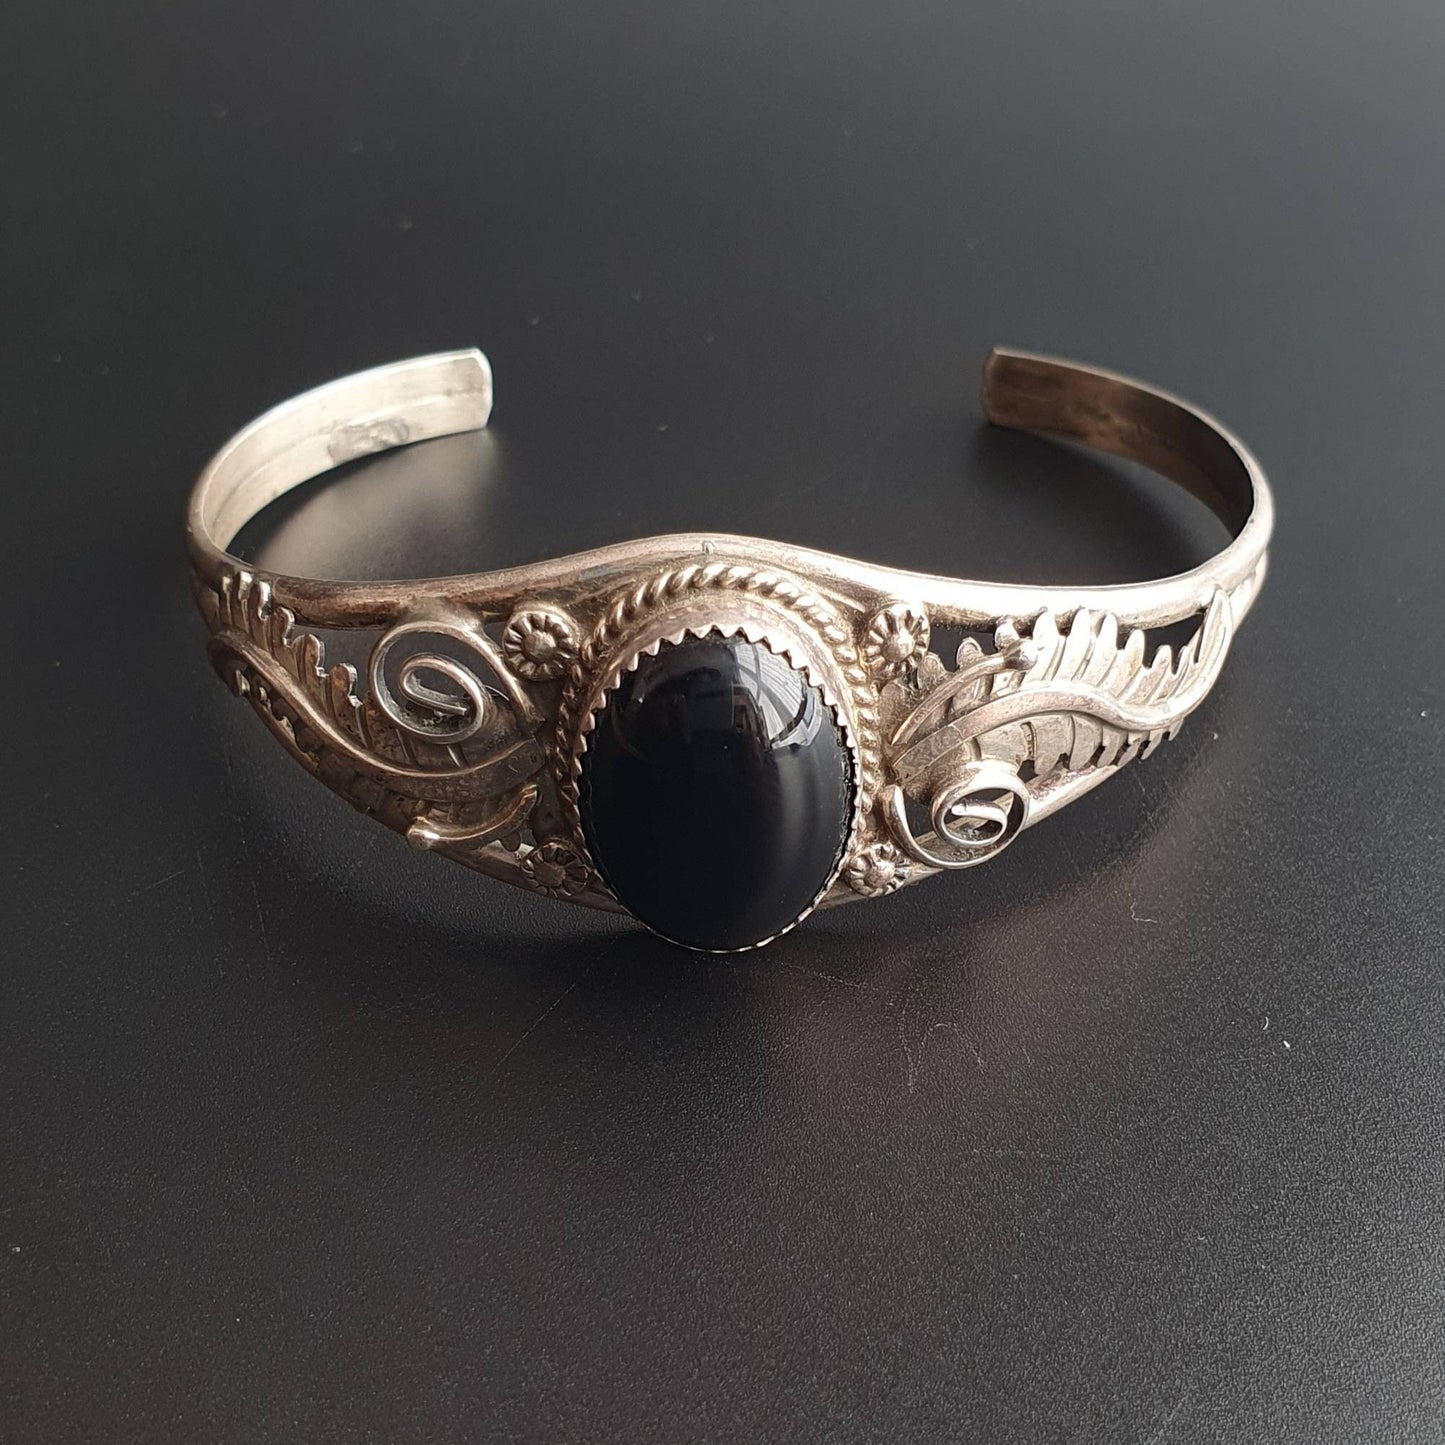 Vintage,cuff,unique,onyx, bracelet, bangle, adjustable, Victorian, Edwardian, gothic, sterling silver, gift's,leaf motif's,signed Y